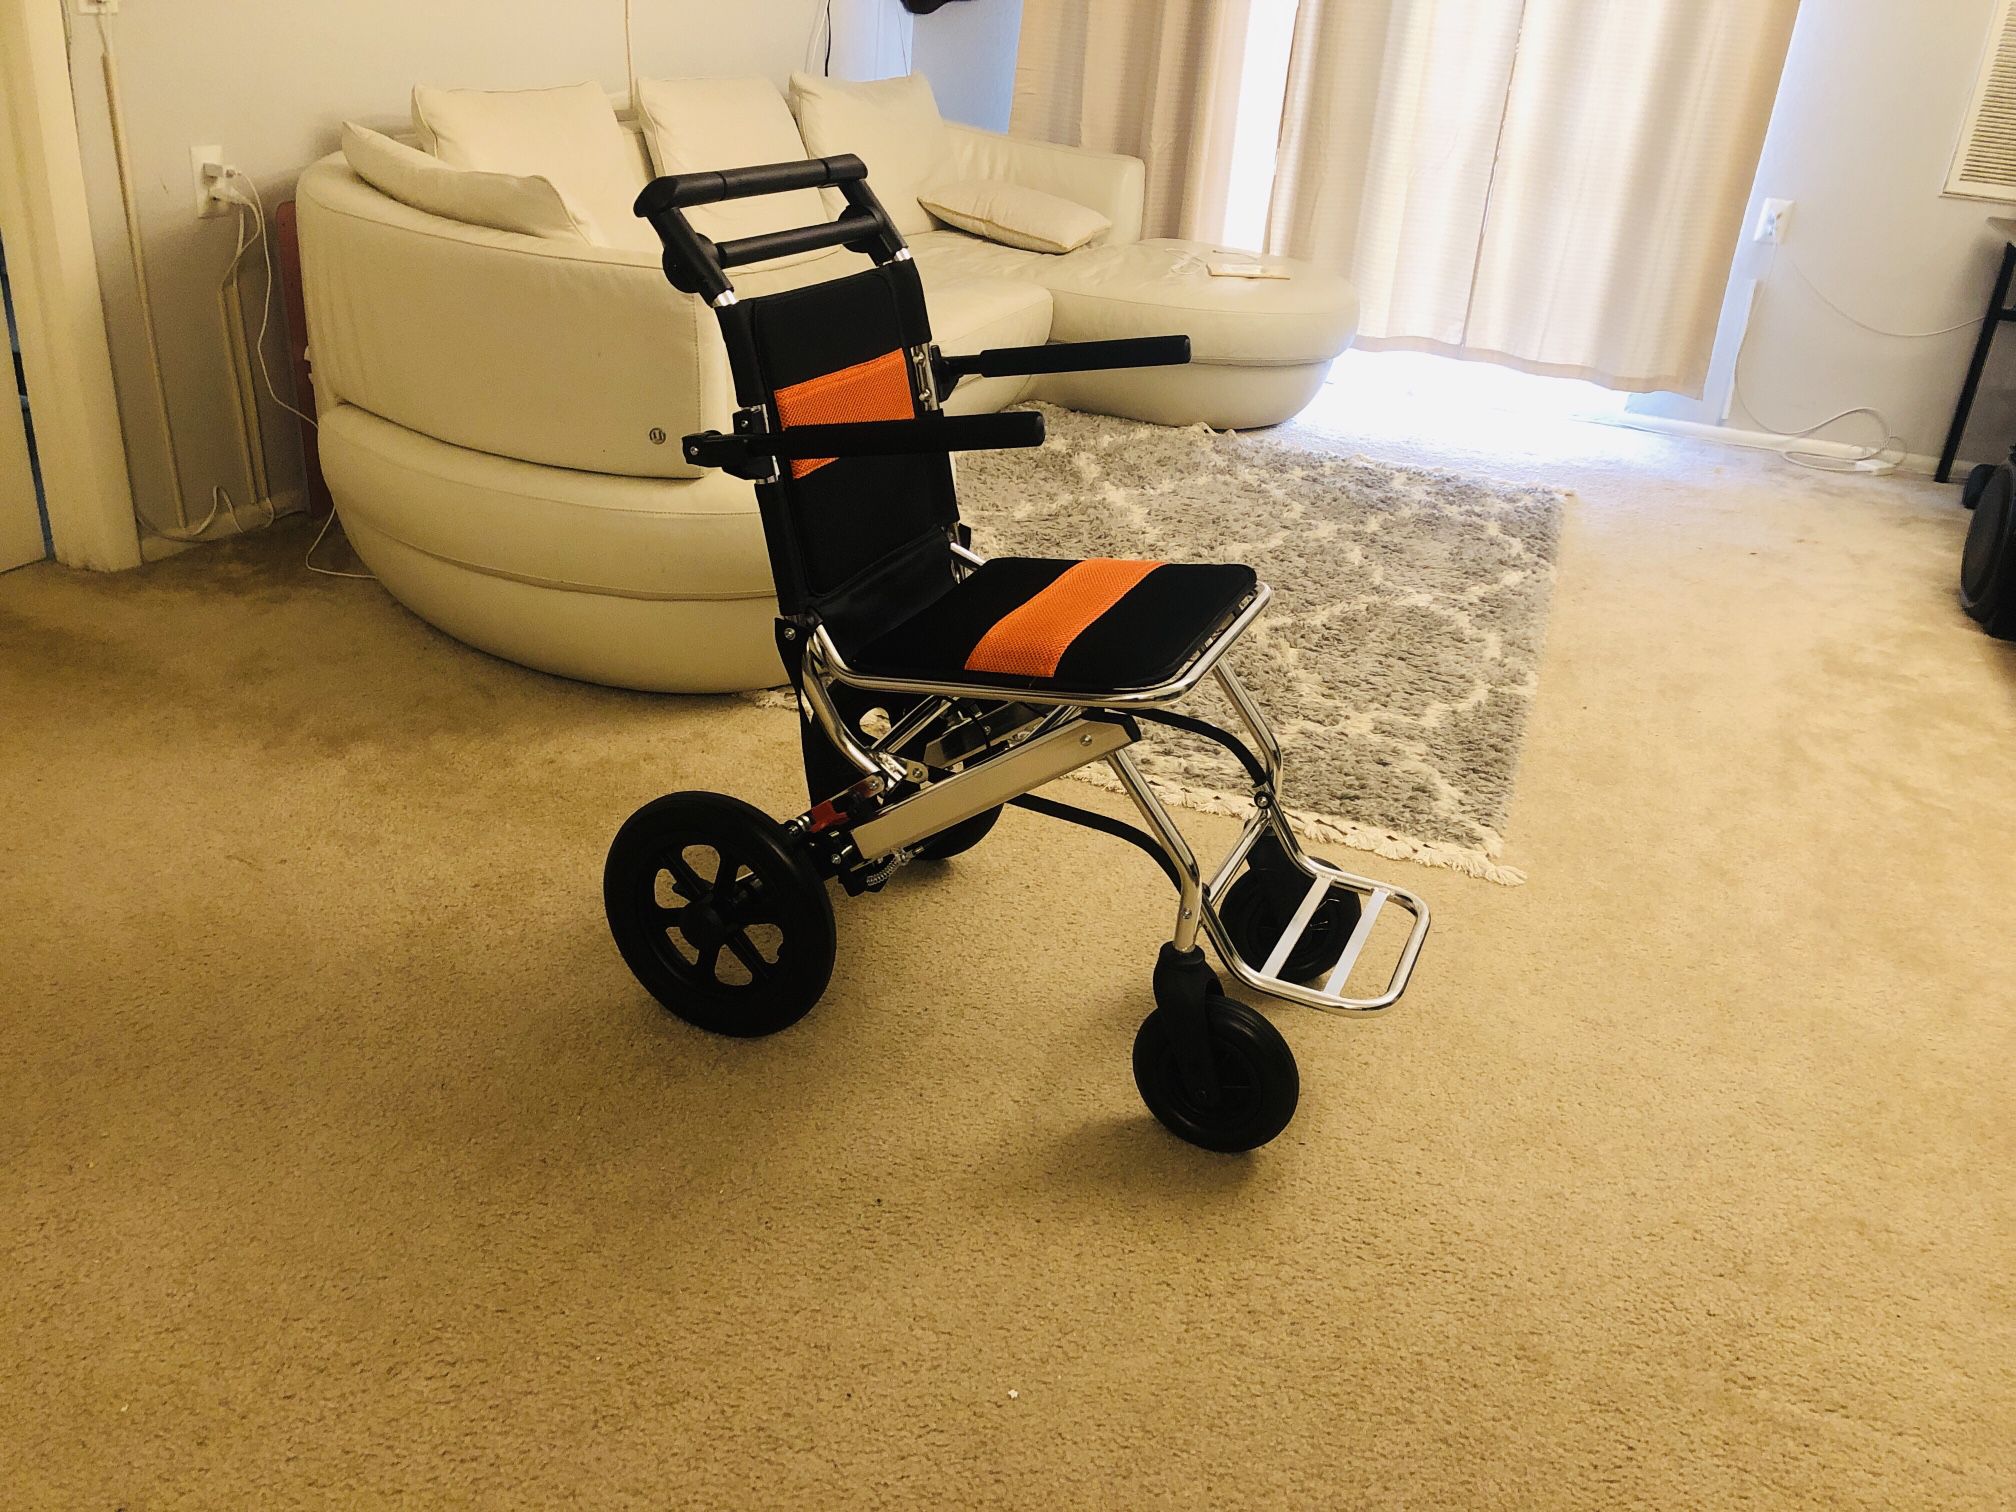 Wheelchair - Portable & Sturdy.